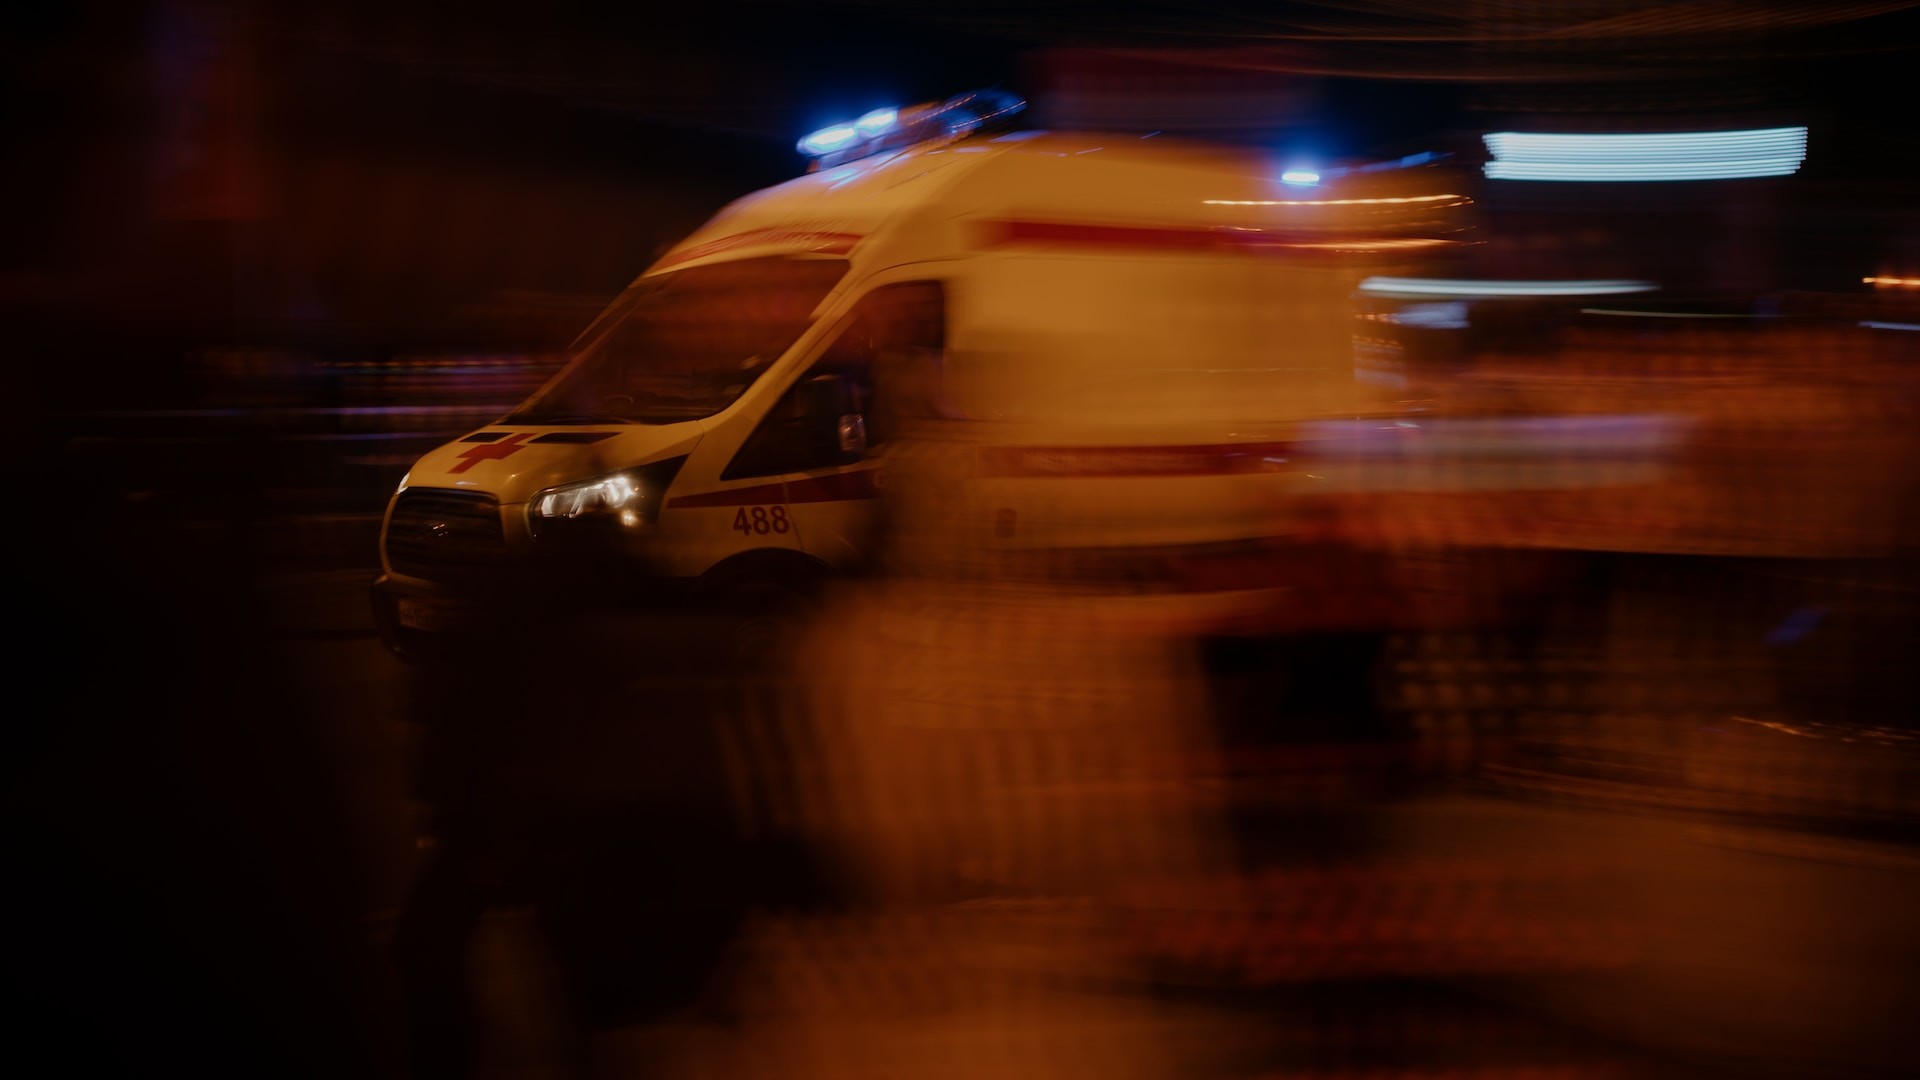 speeding ambulance